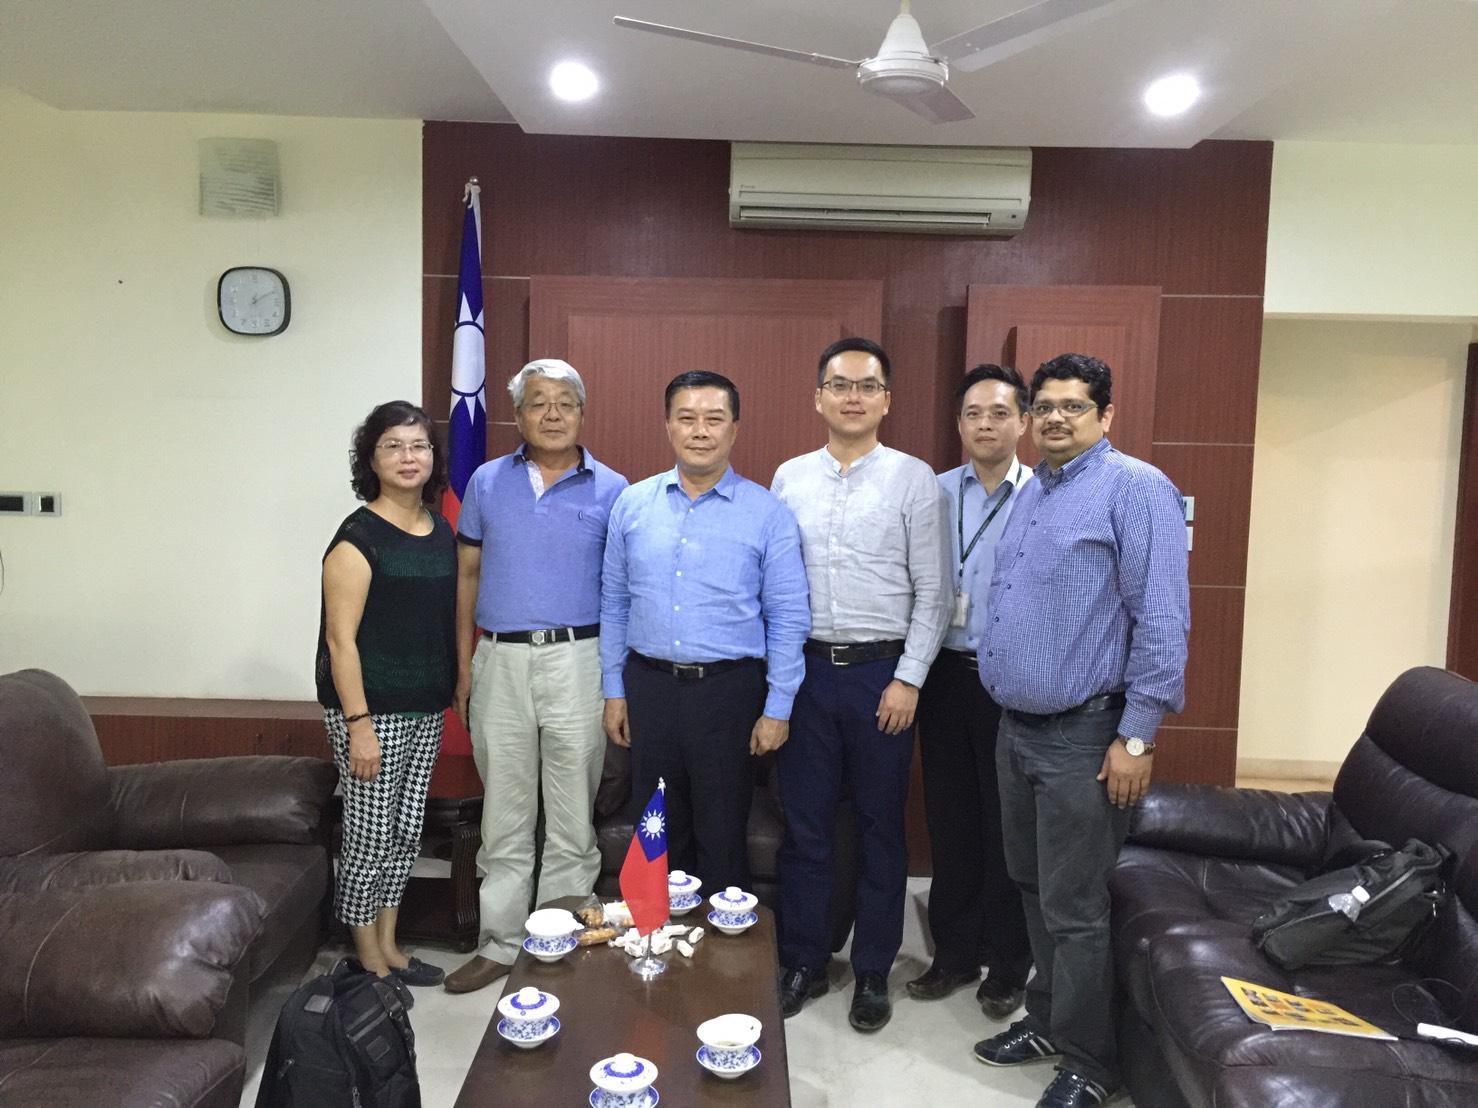 (From Left to Right: Mrs. David Tseng, Mr. David Tseng, Director General Charles Li, Mr. Kevin Tseng, Mr. Century Huang, Mr. Parikshit Jain)
